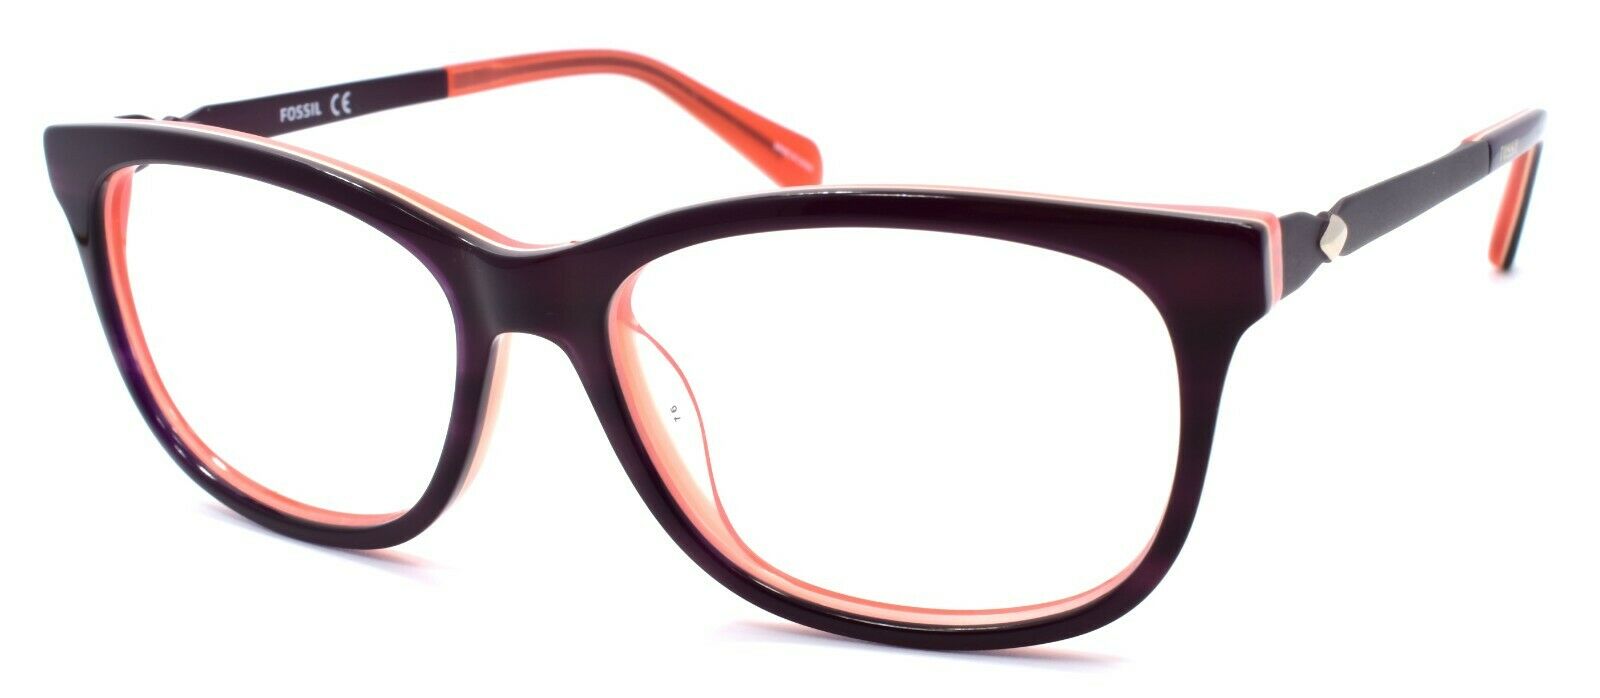 1-Fossil FOS 7025 7FF Women's Eyeglasses Frames 50-15-140 Purple Violet Red-716736029269-IKSpecs